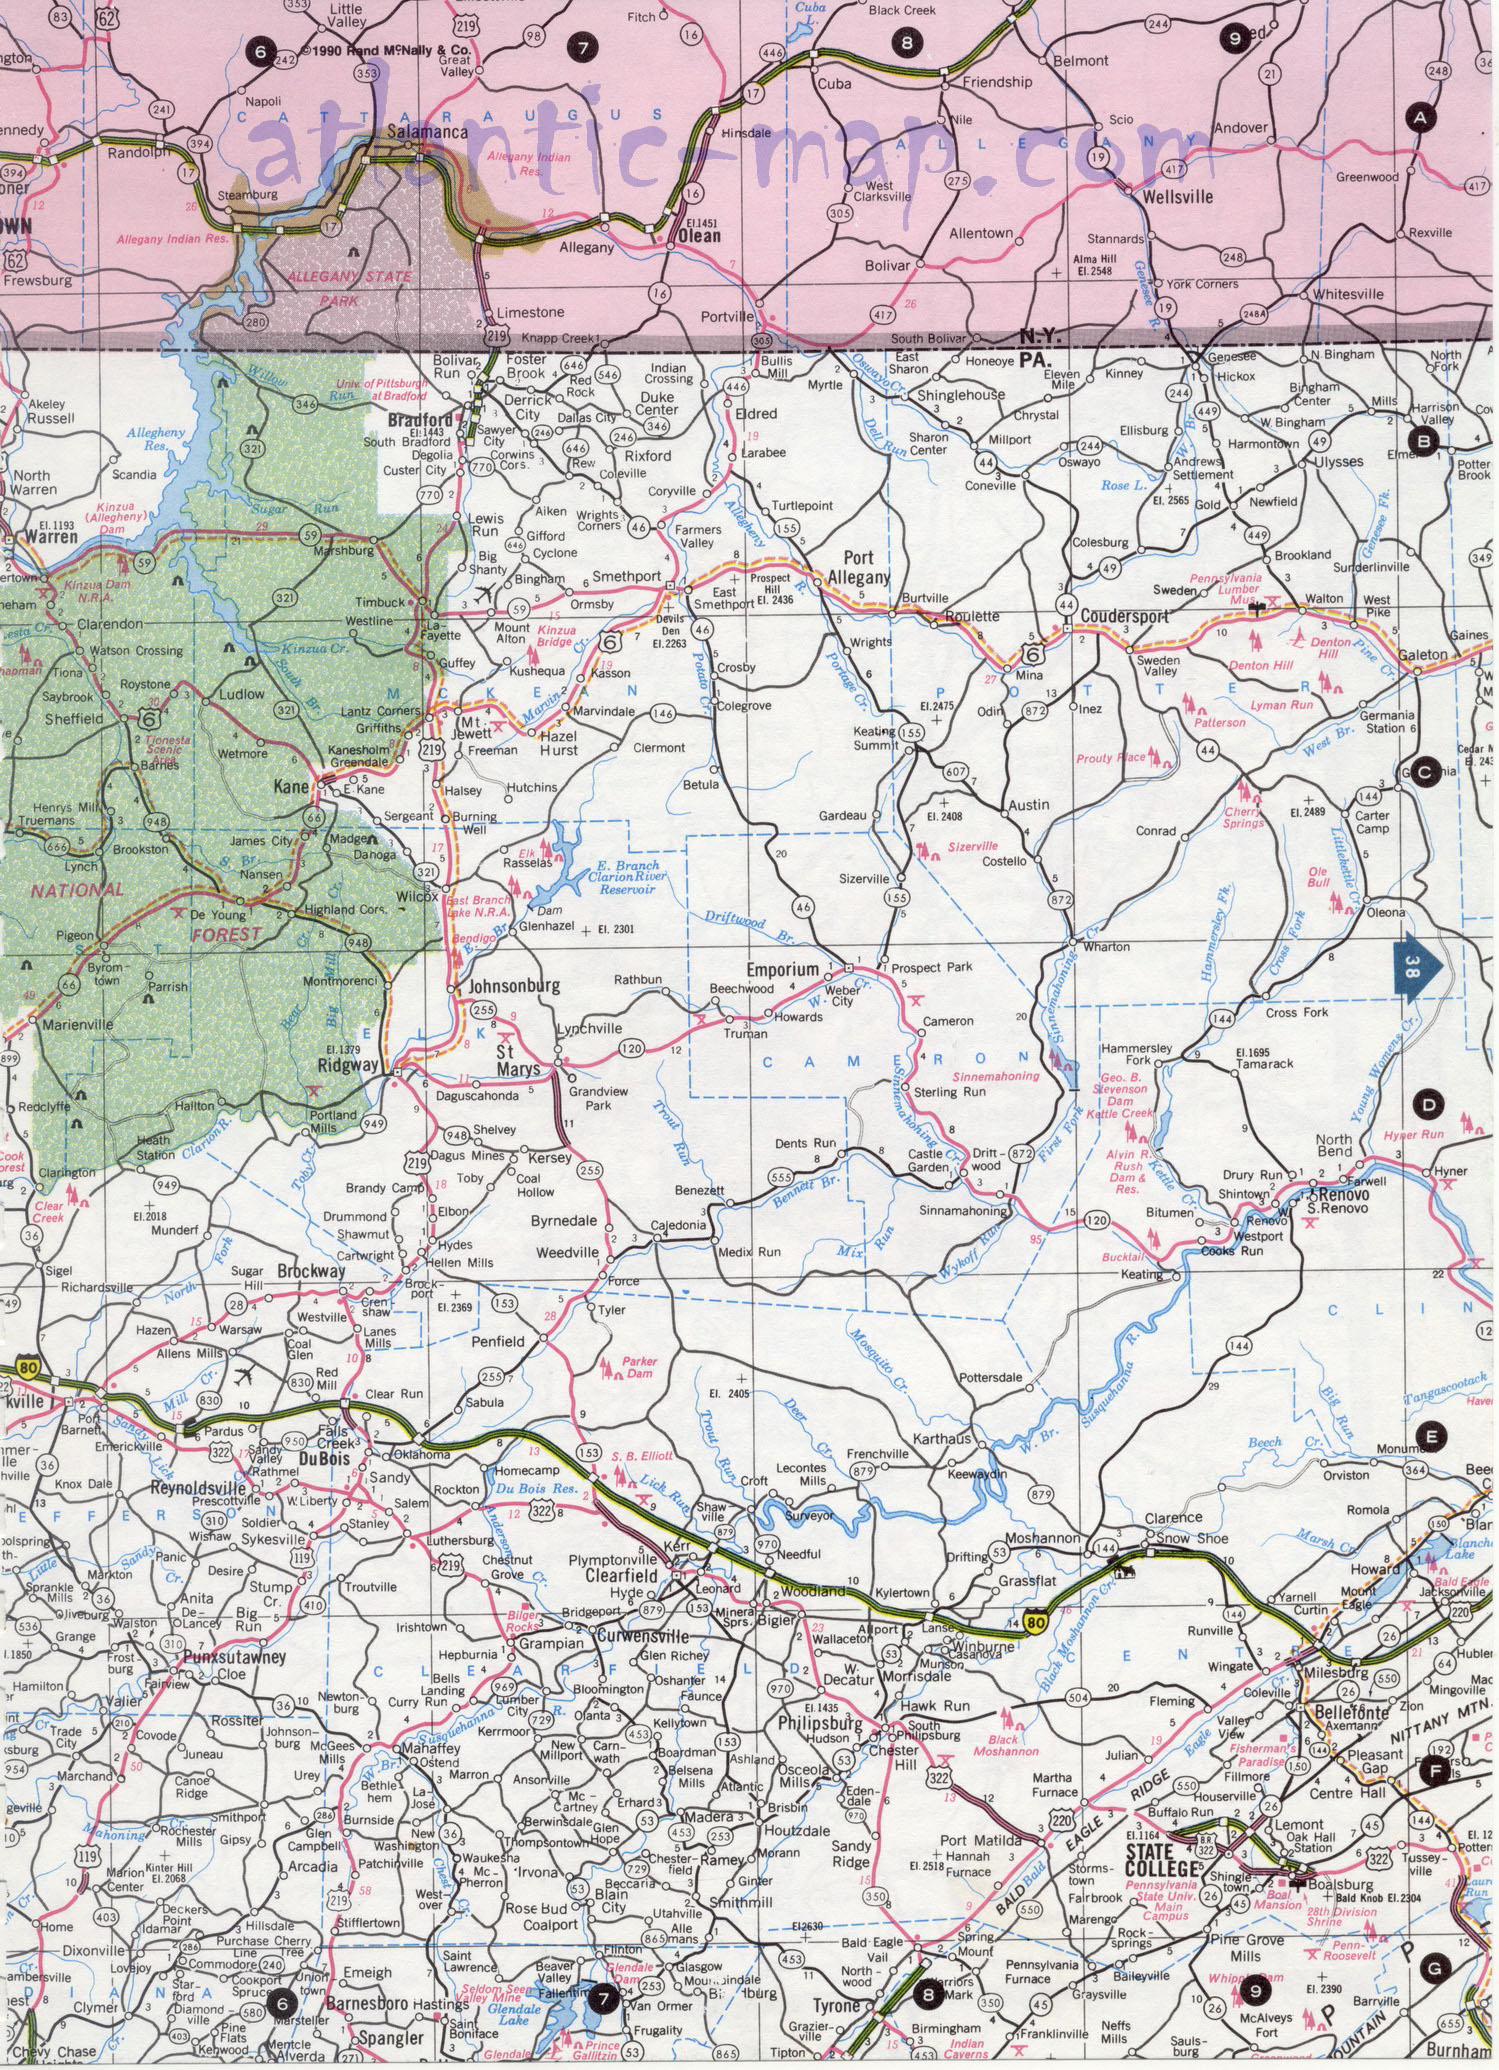 Northwest Pennsylvania state road map